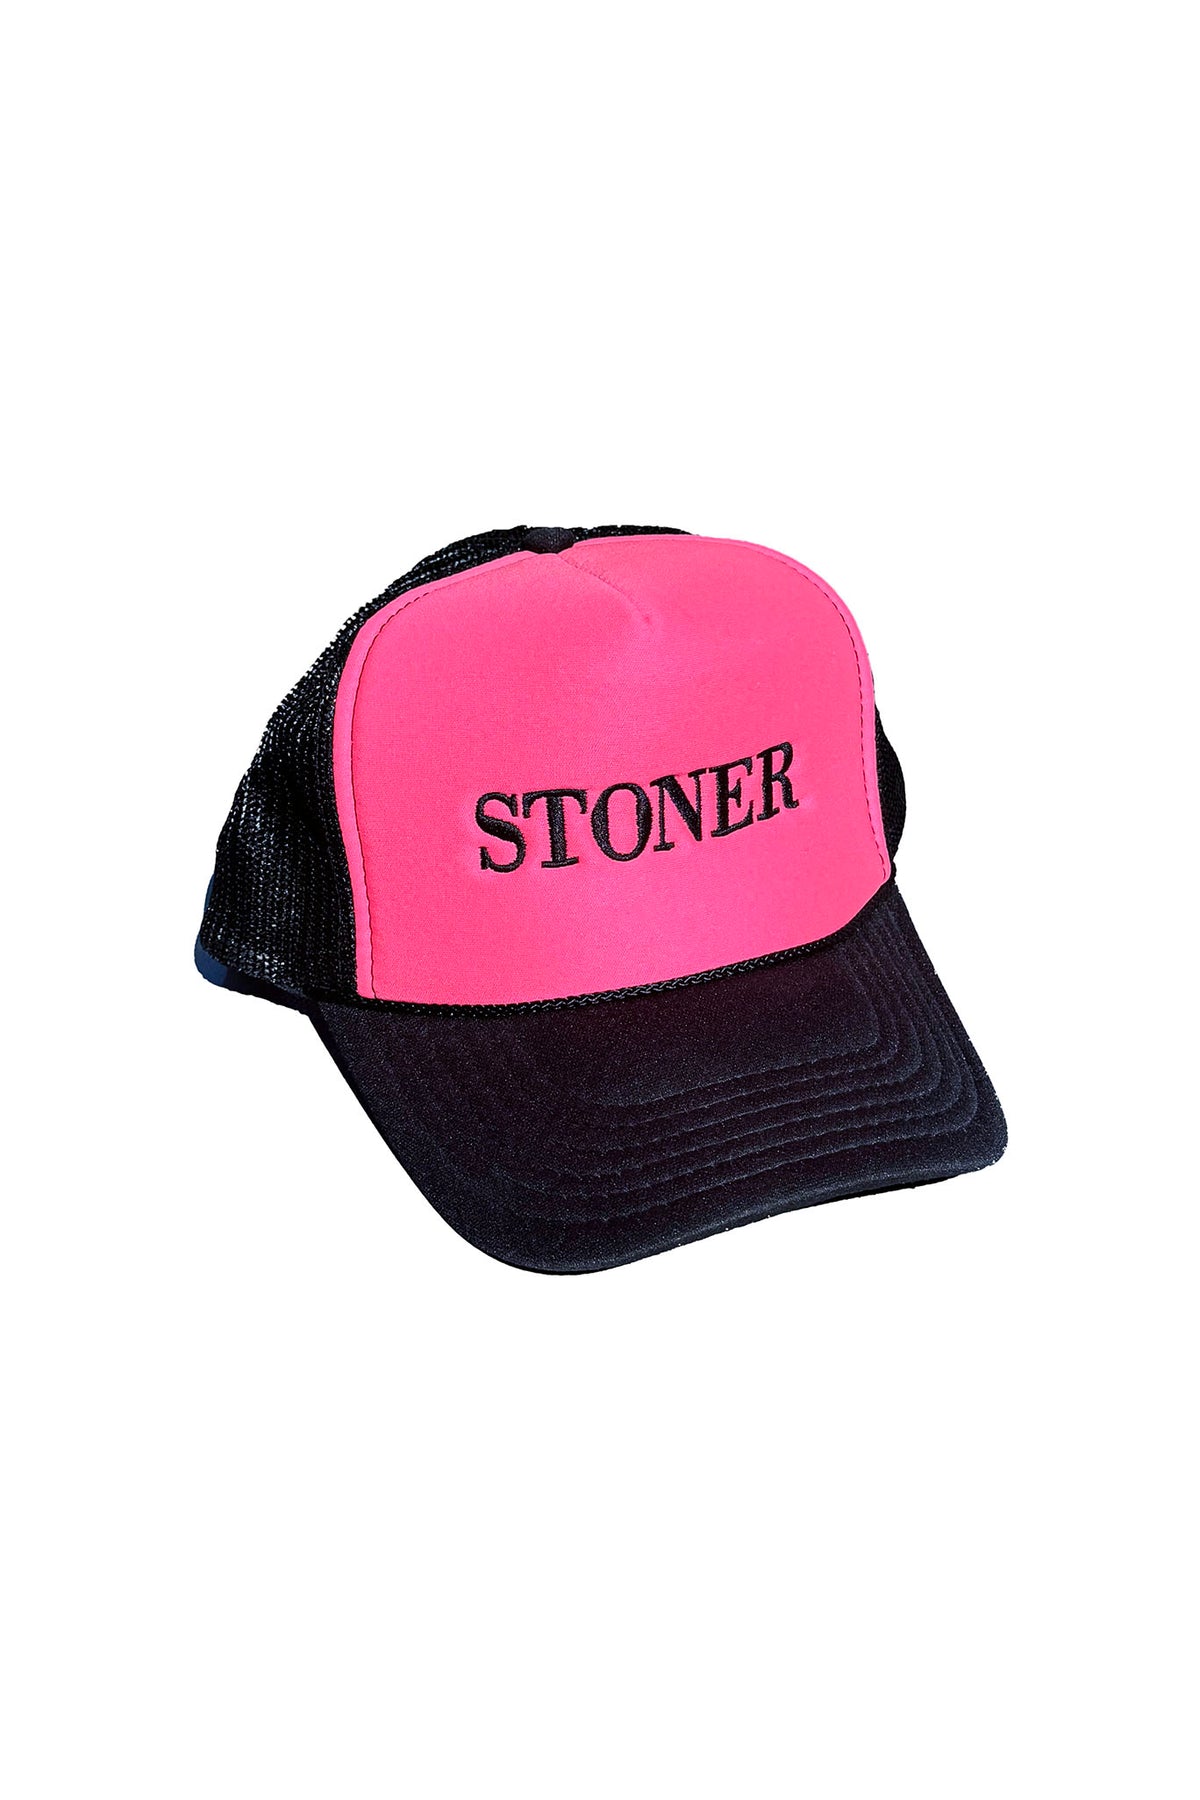 Stoner Trucker Cap